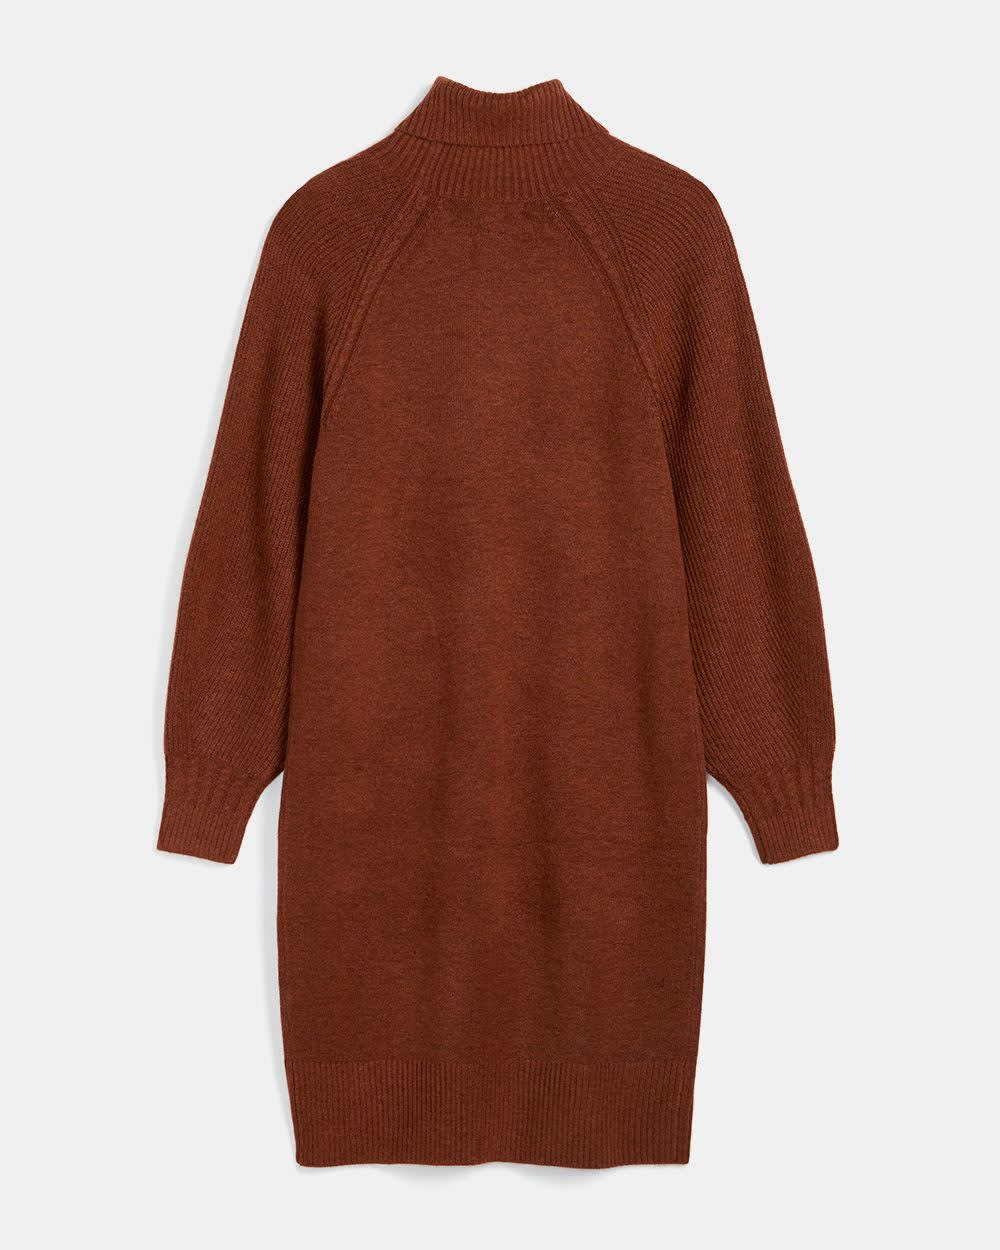 Soft Spongy Knit Turtleneck Sweater Dress | RW&CO.